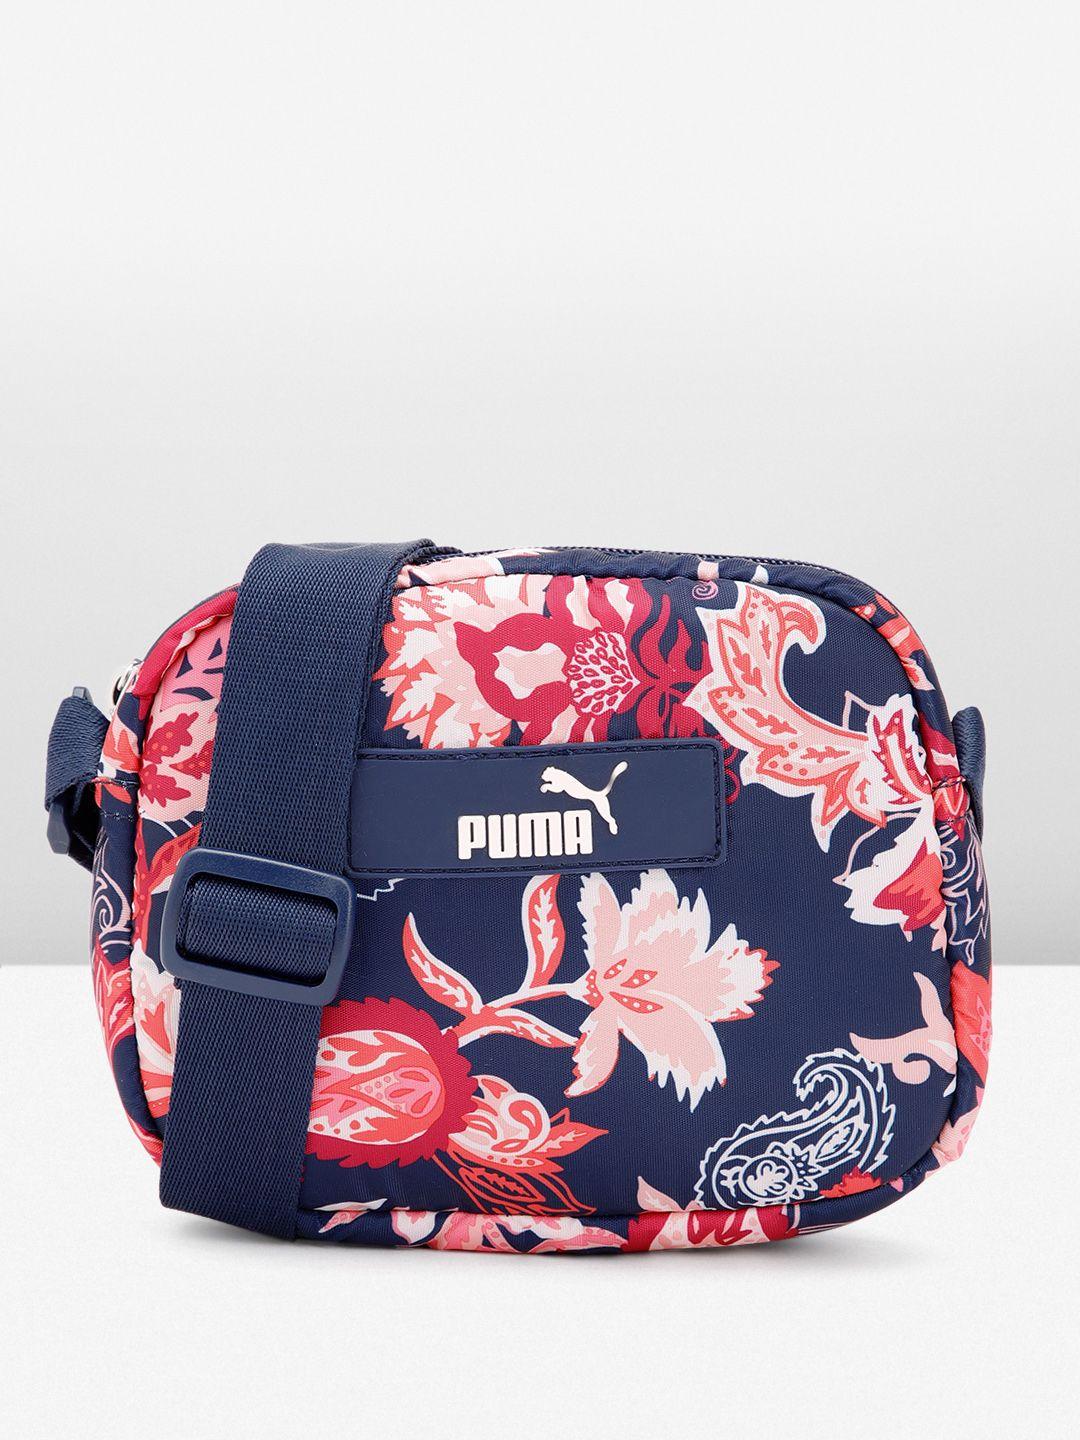 Puma Blue Floral Printed Structured Crossbody Sling Bag